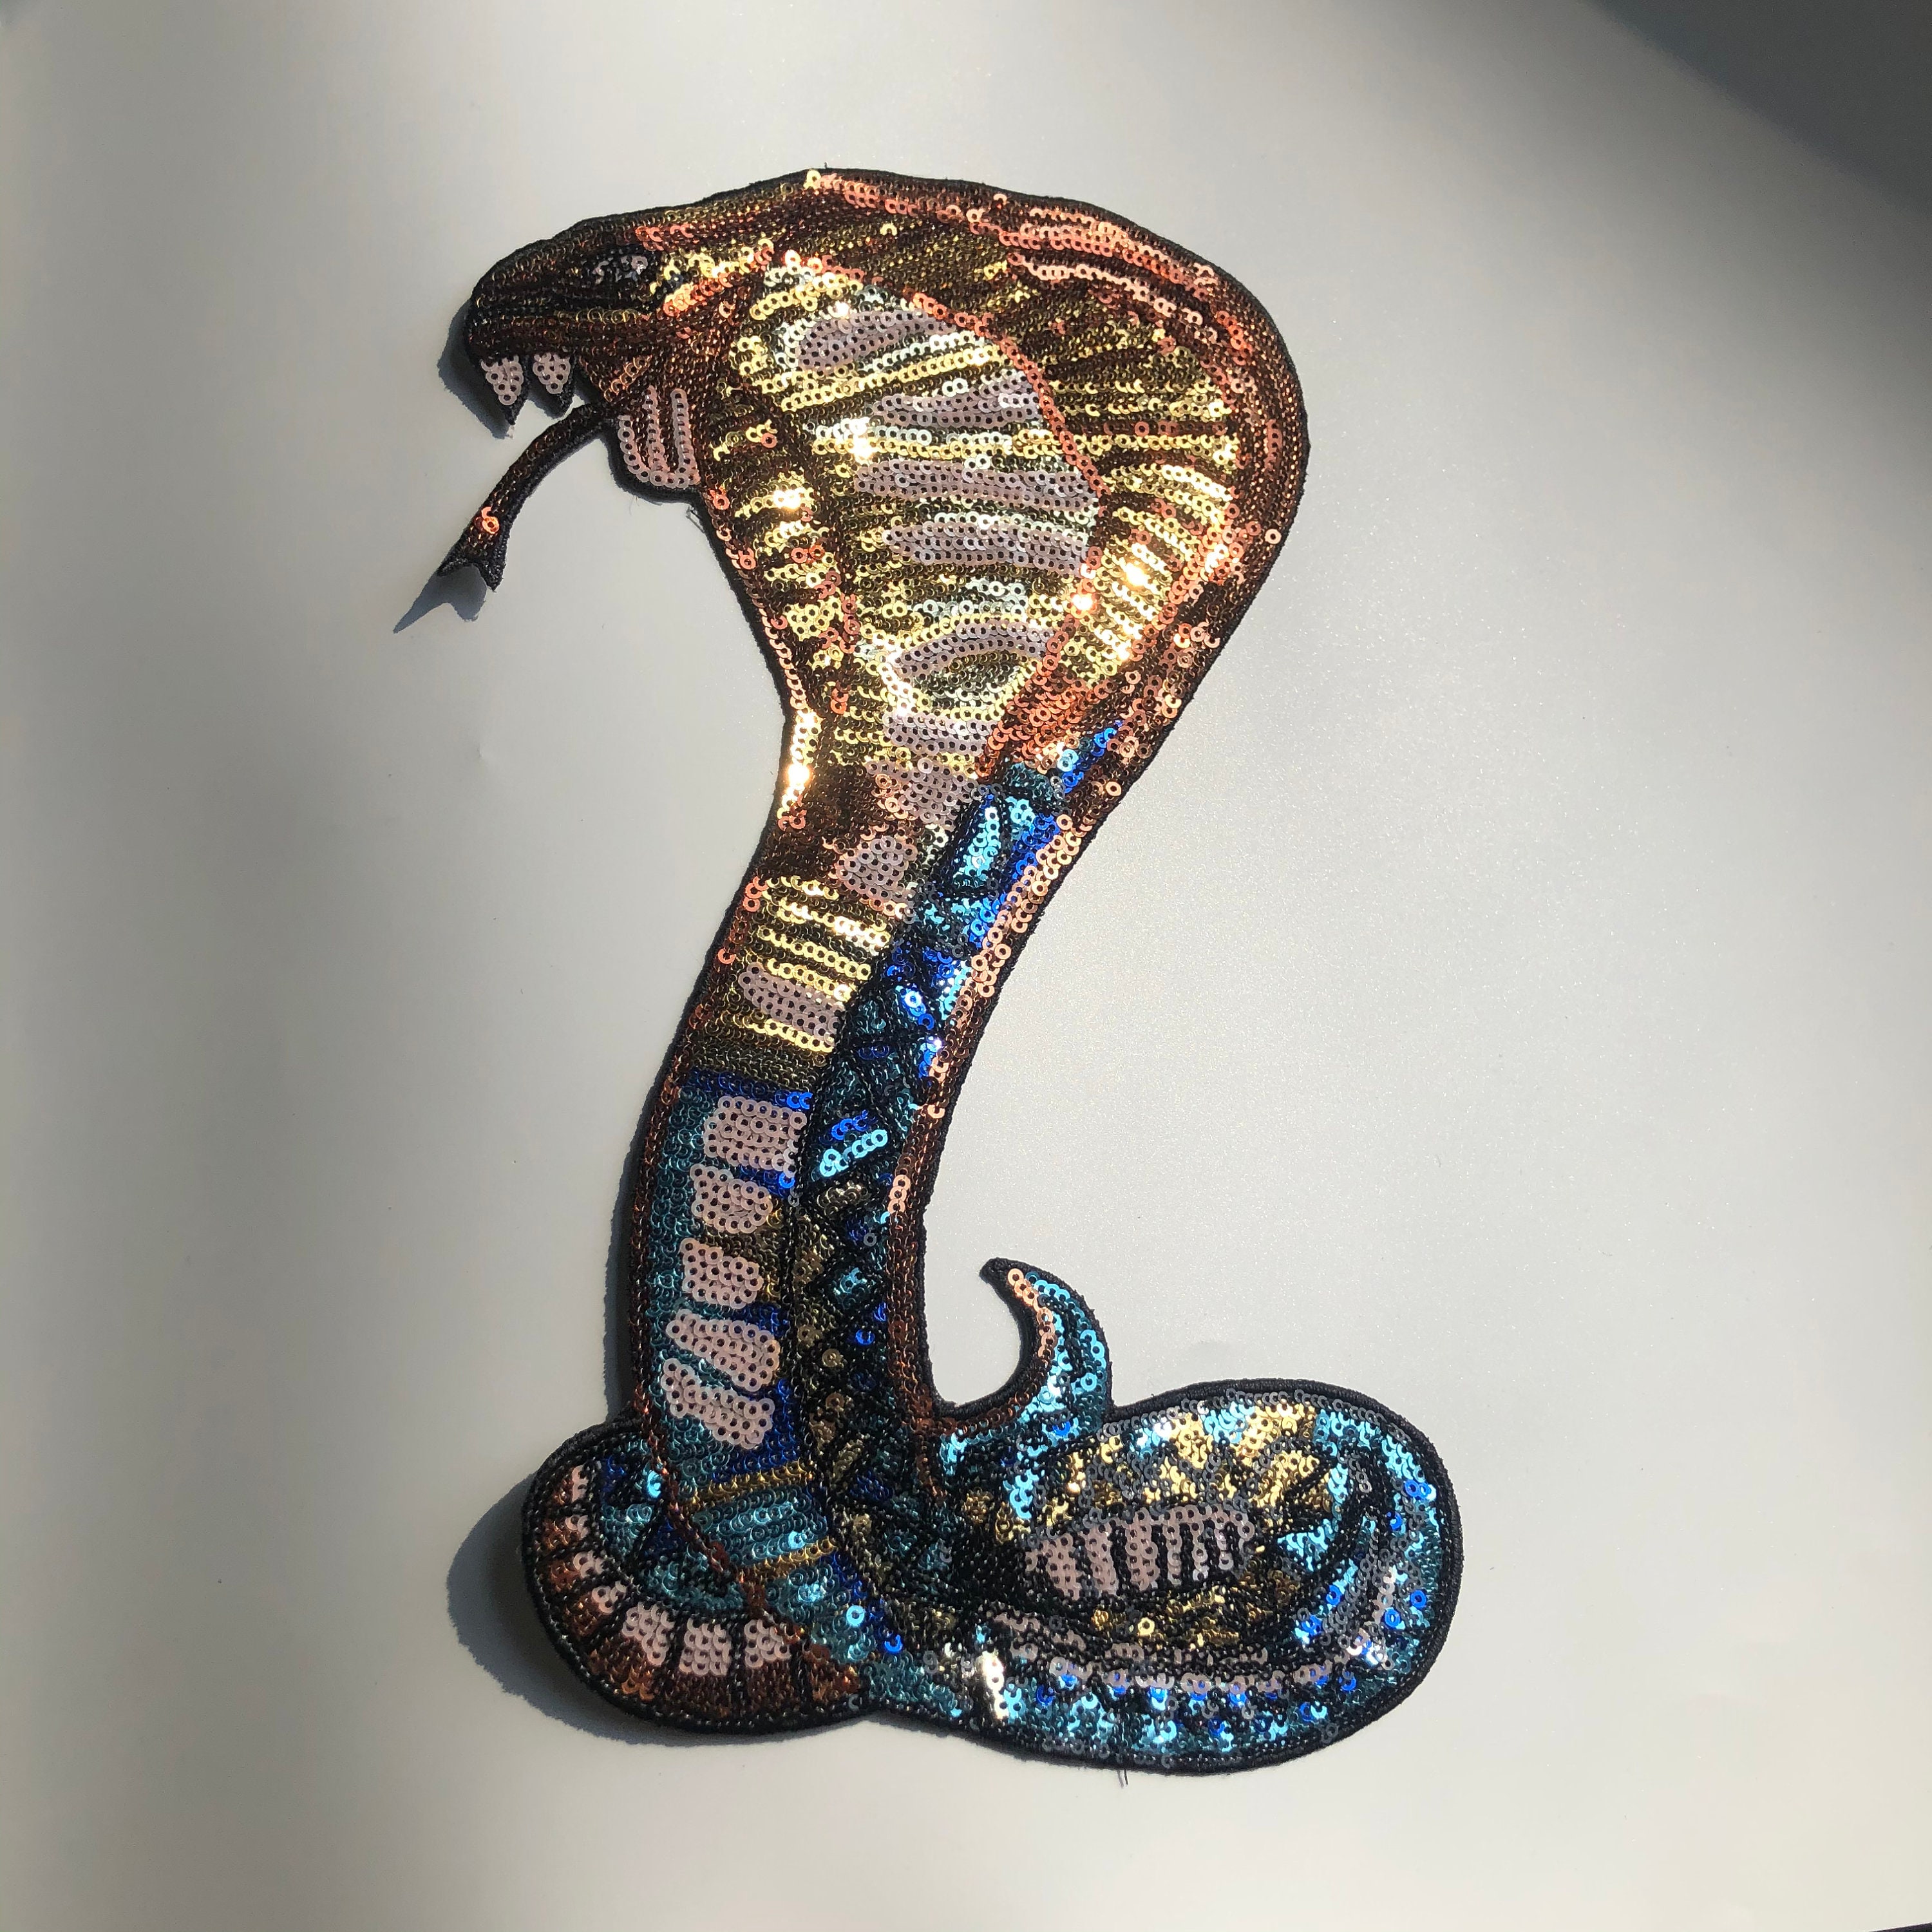 Amazoncom  King cobra snake Anaconda Poisonous animals 4X8 in MEGADEE  Tattoo Sticker Body Arm Leg Body Art Beauty Makeup Cool Removable  Waterproof Tattoo Sticker Great as happy gift Tattoo Sticker 051 